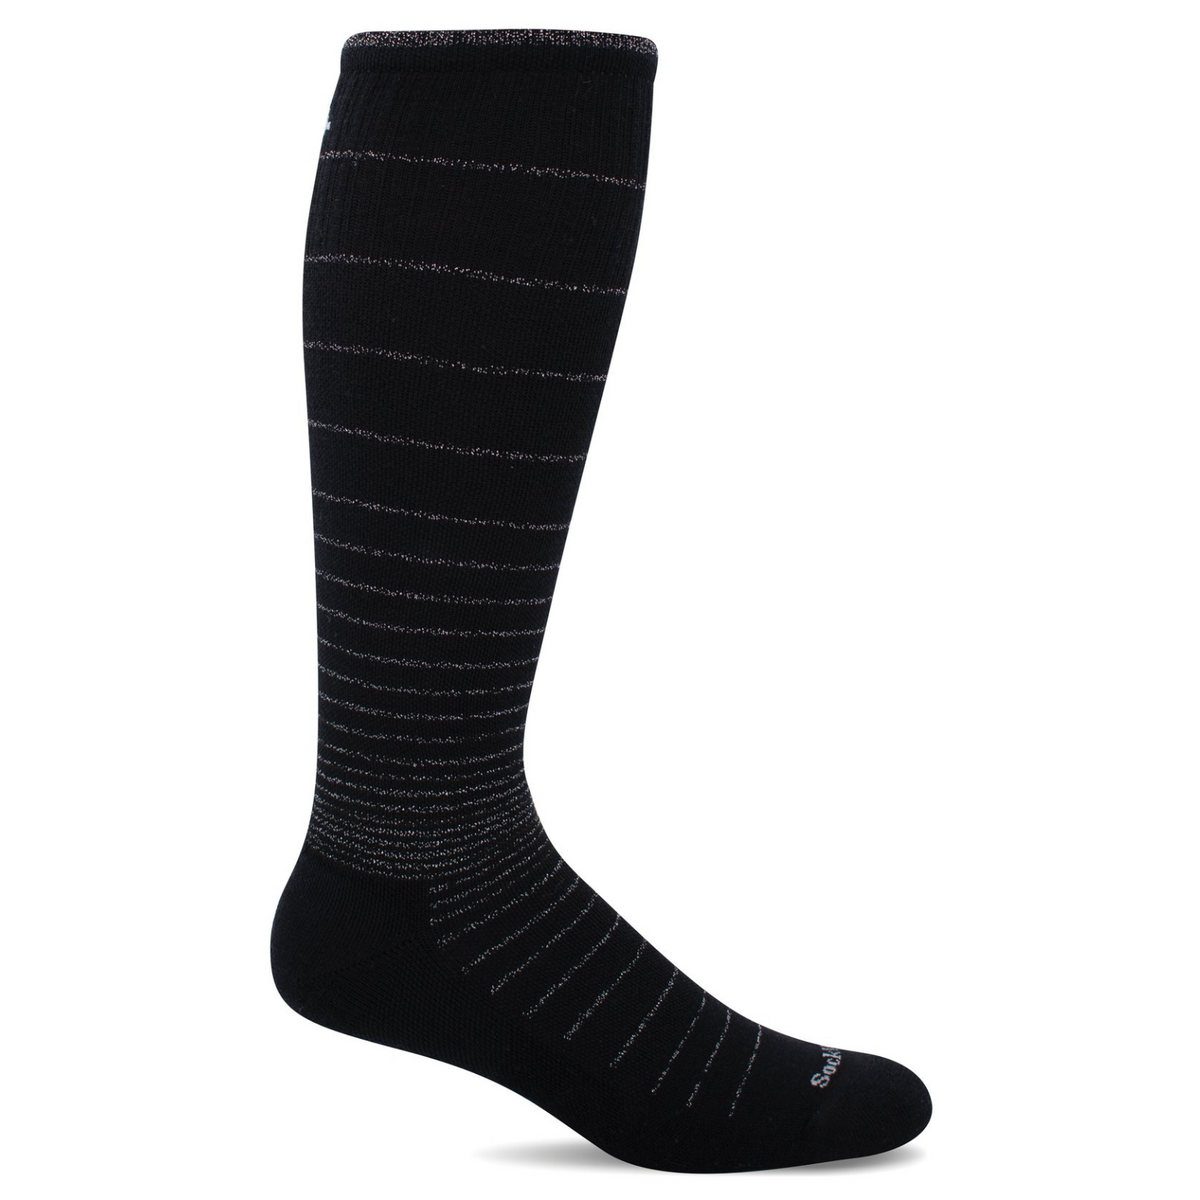 Sockwell Circulator moderate graduated compression (15-20 mmHg) knee high women&#39;s sock in black sparkle